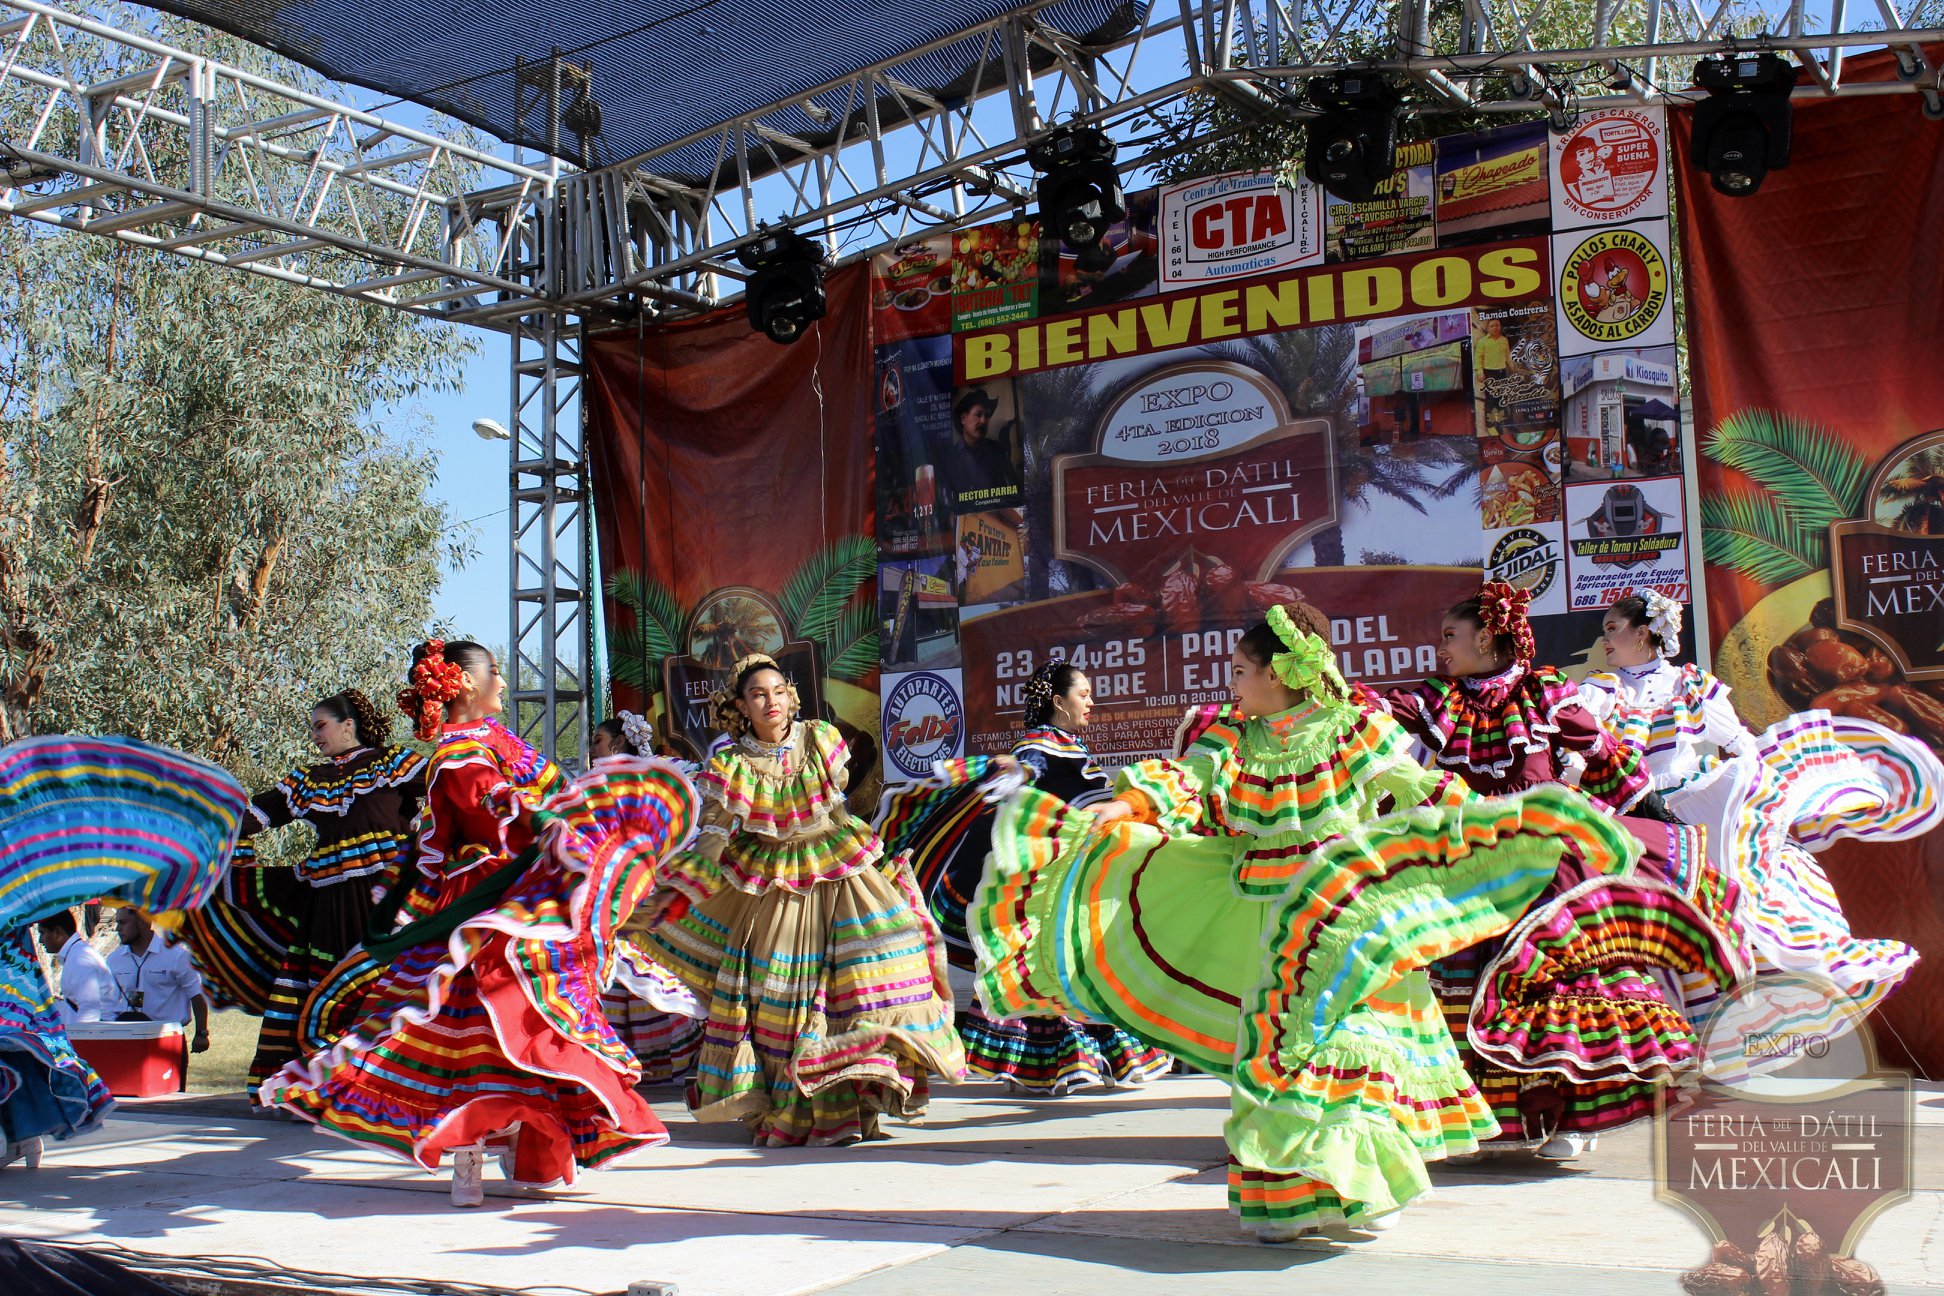 Feria del datil mexicali